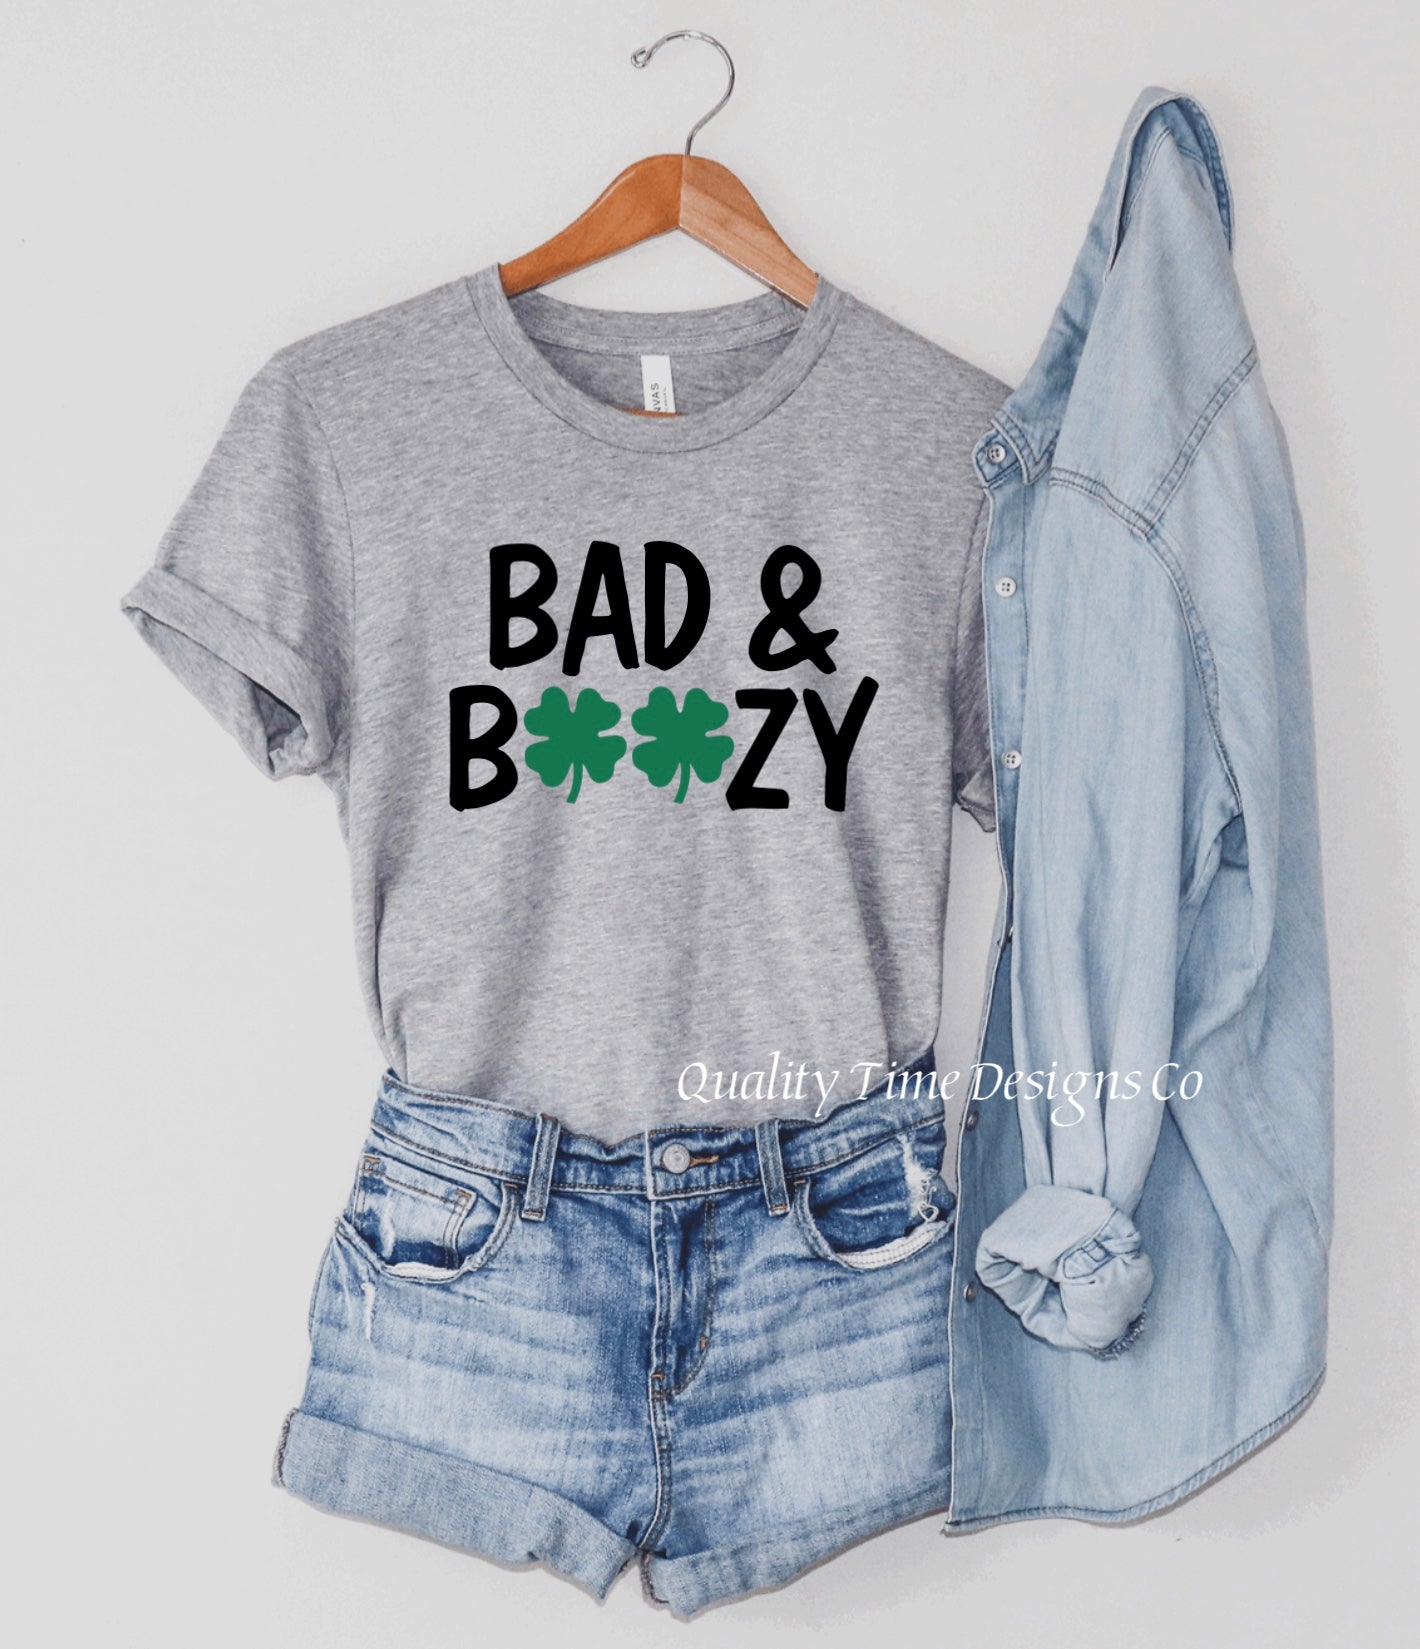 Bad and boozy t-shirt 